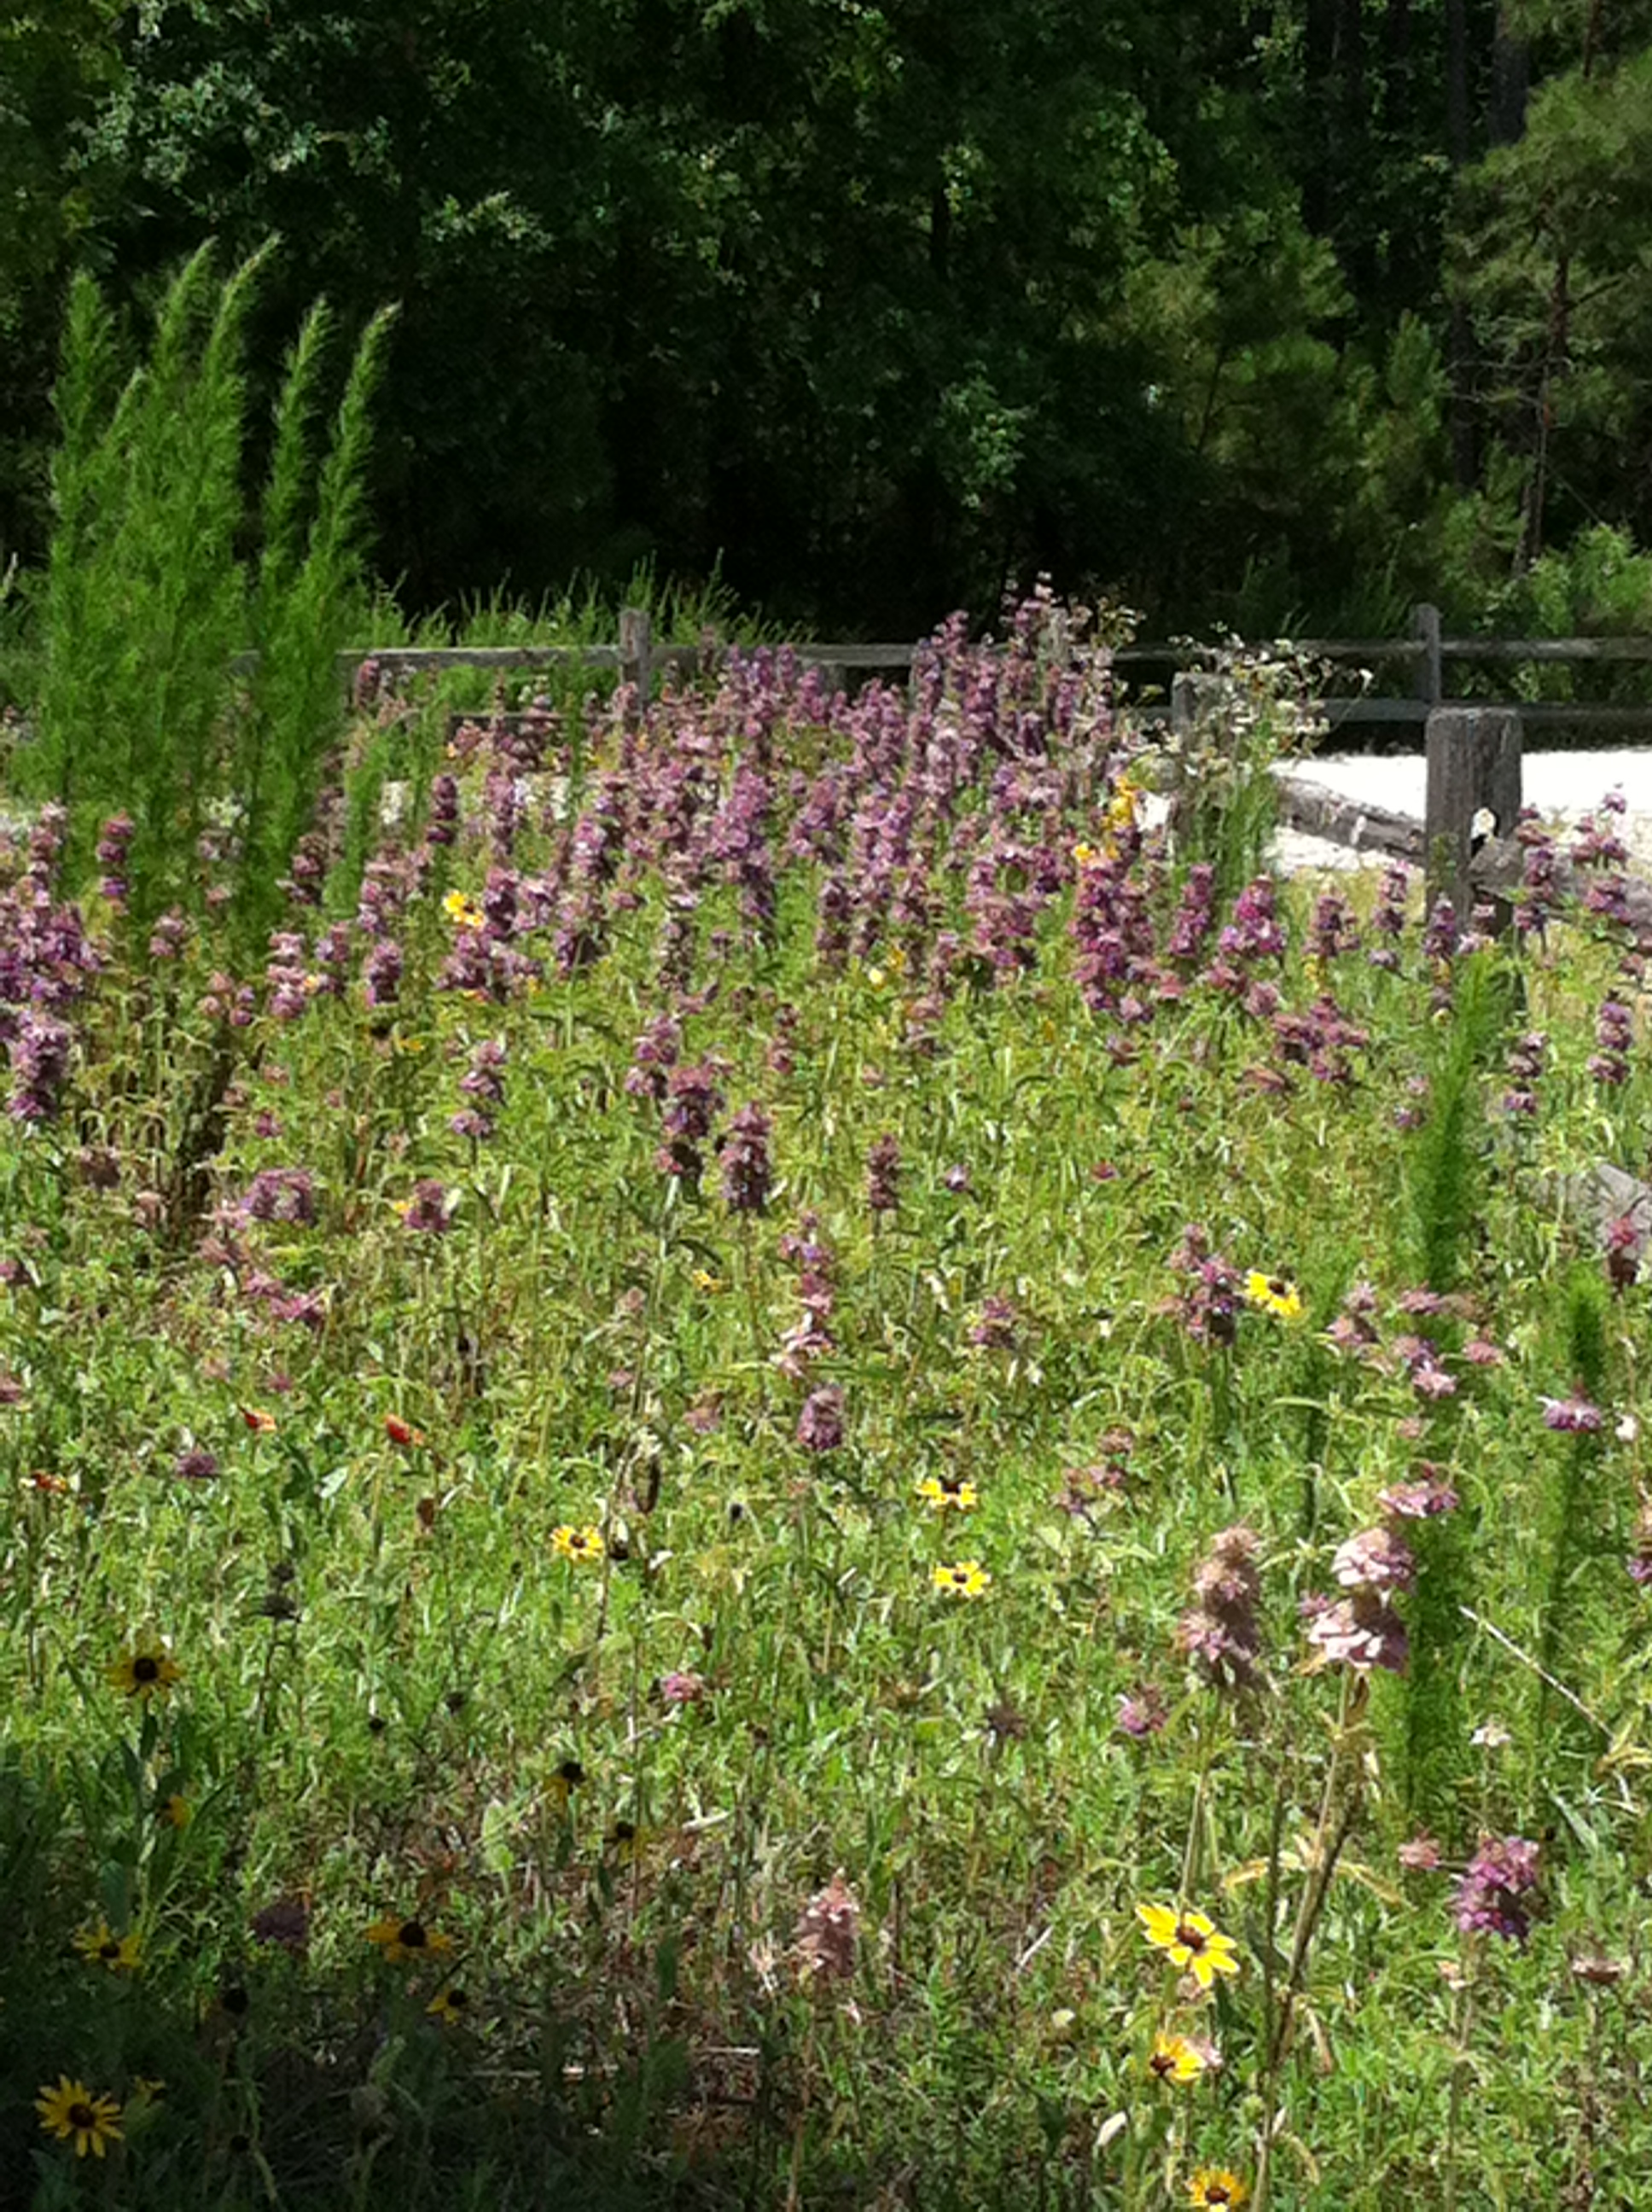 Pollinators near the Enoree OHV Trail